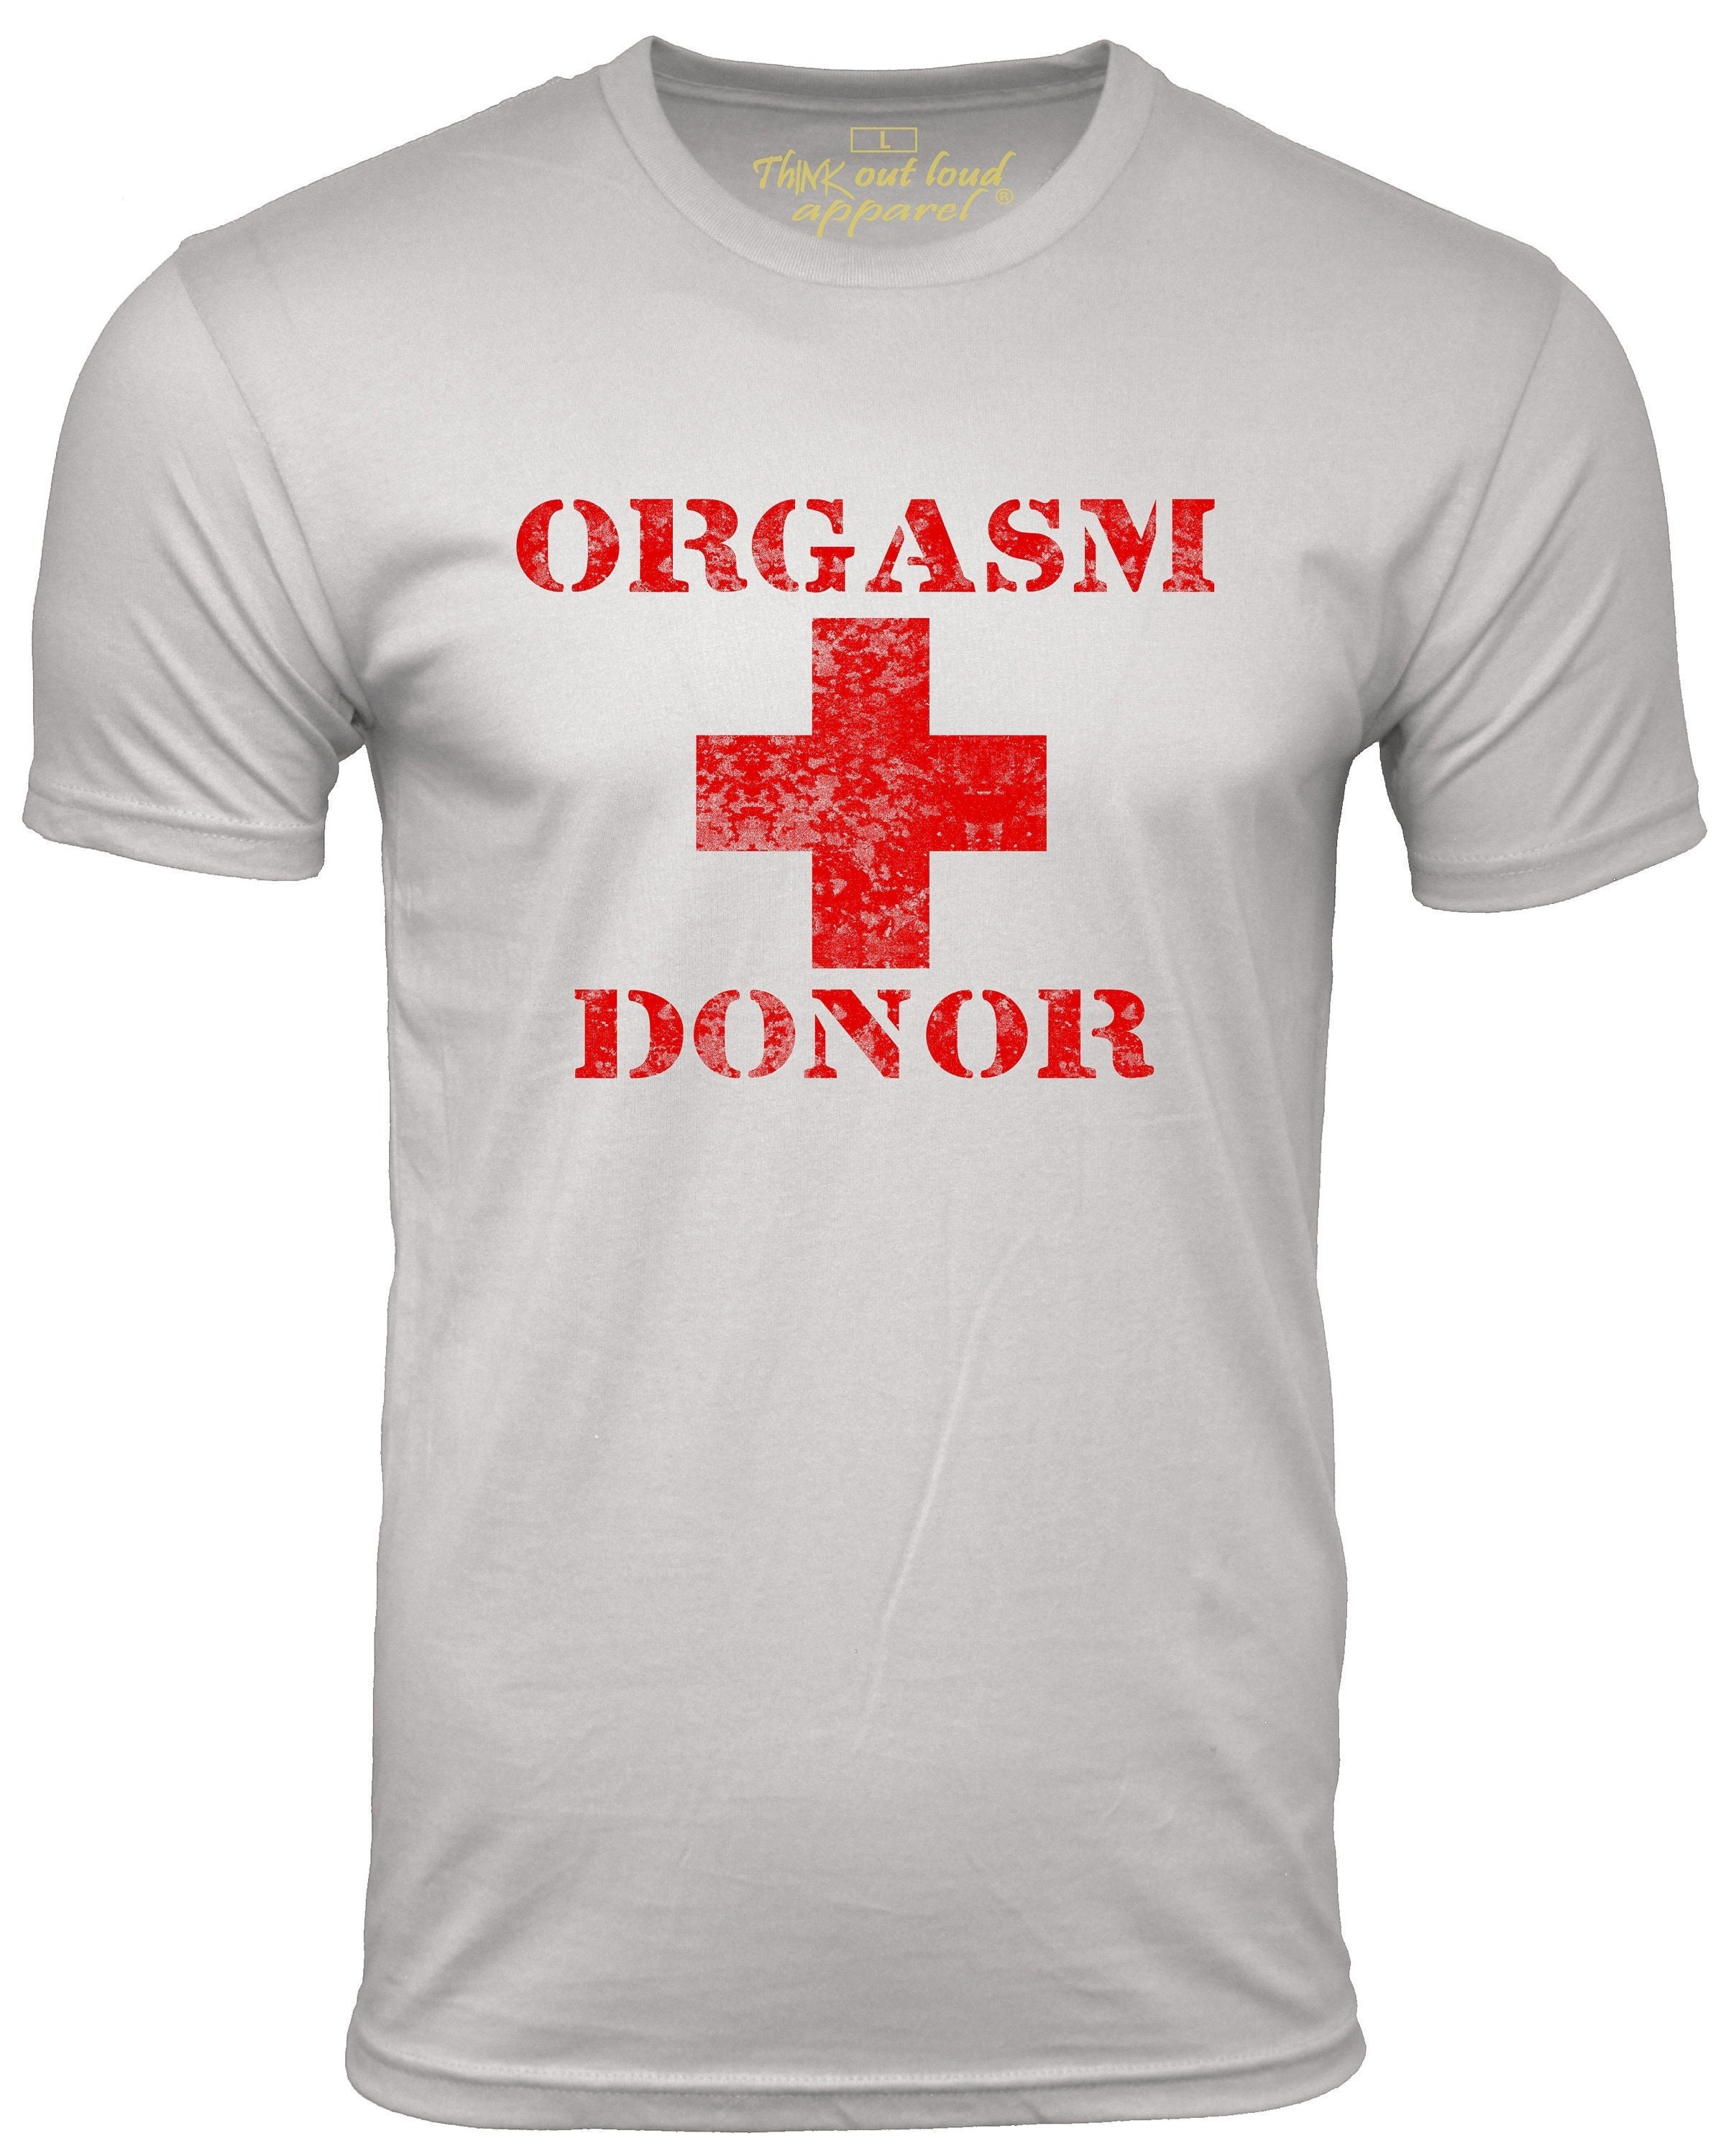 Orgasm Donor Funny T-shirt Humor image